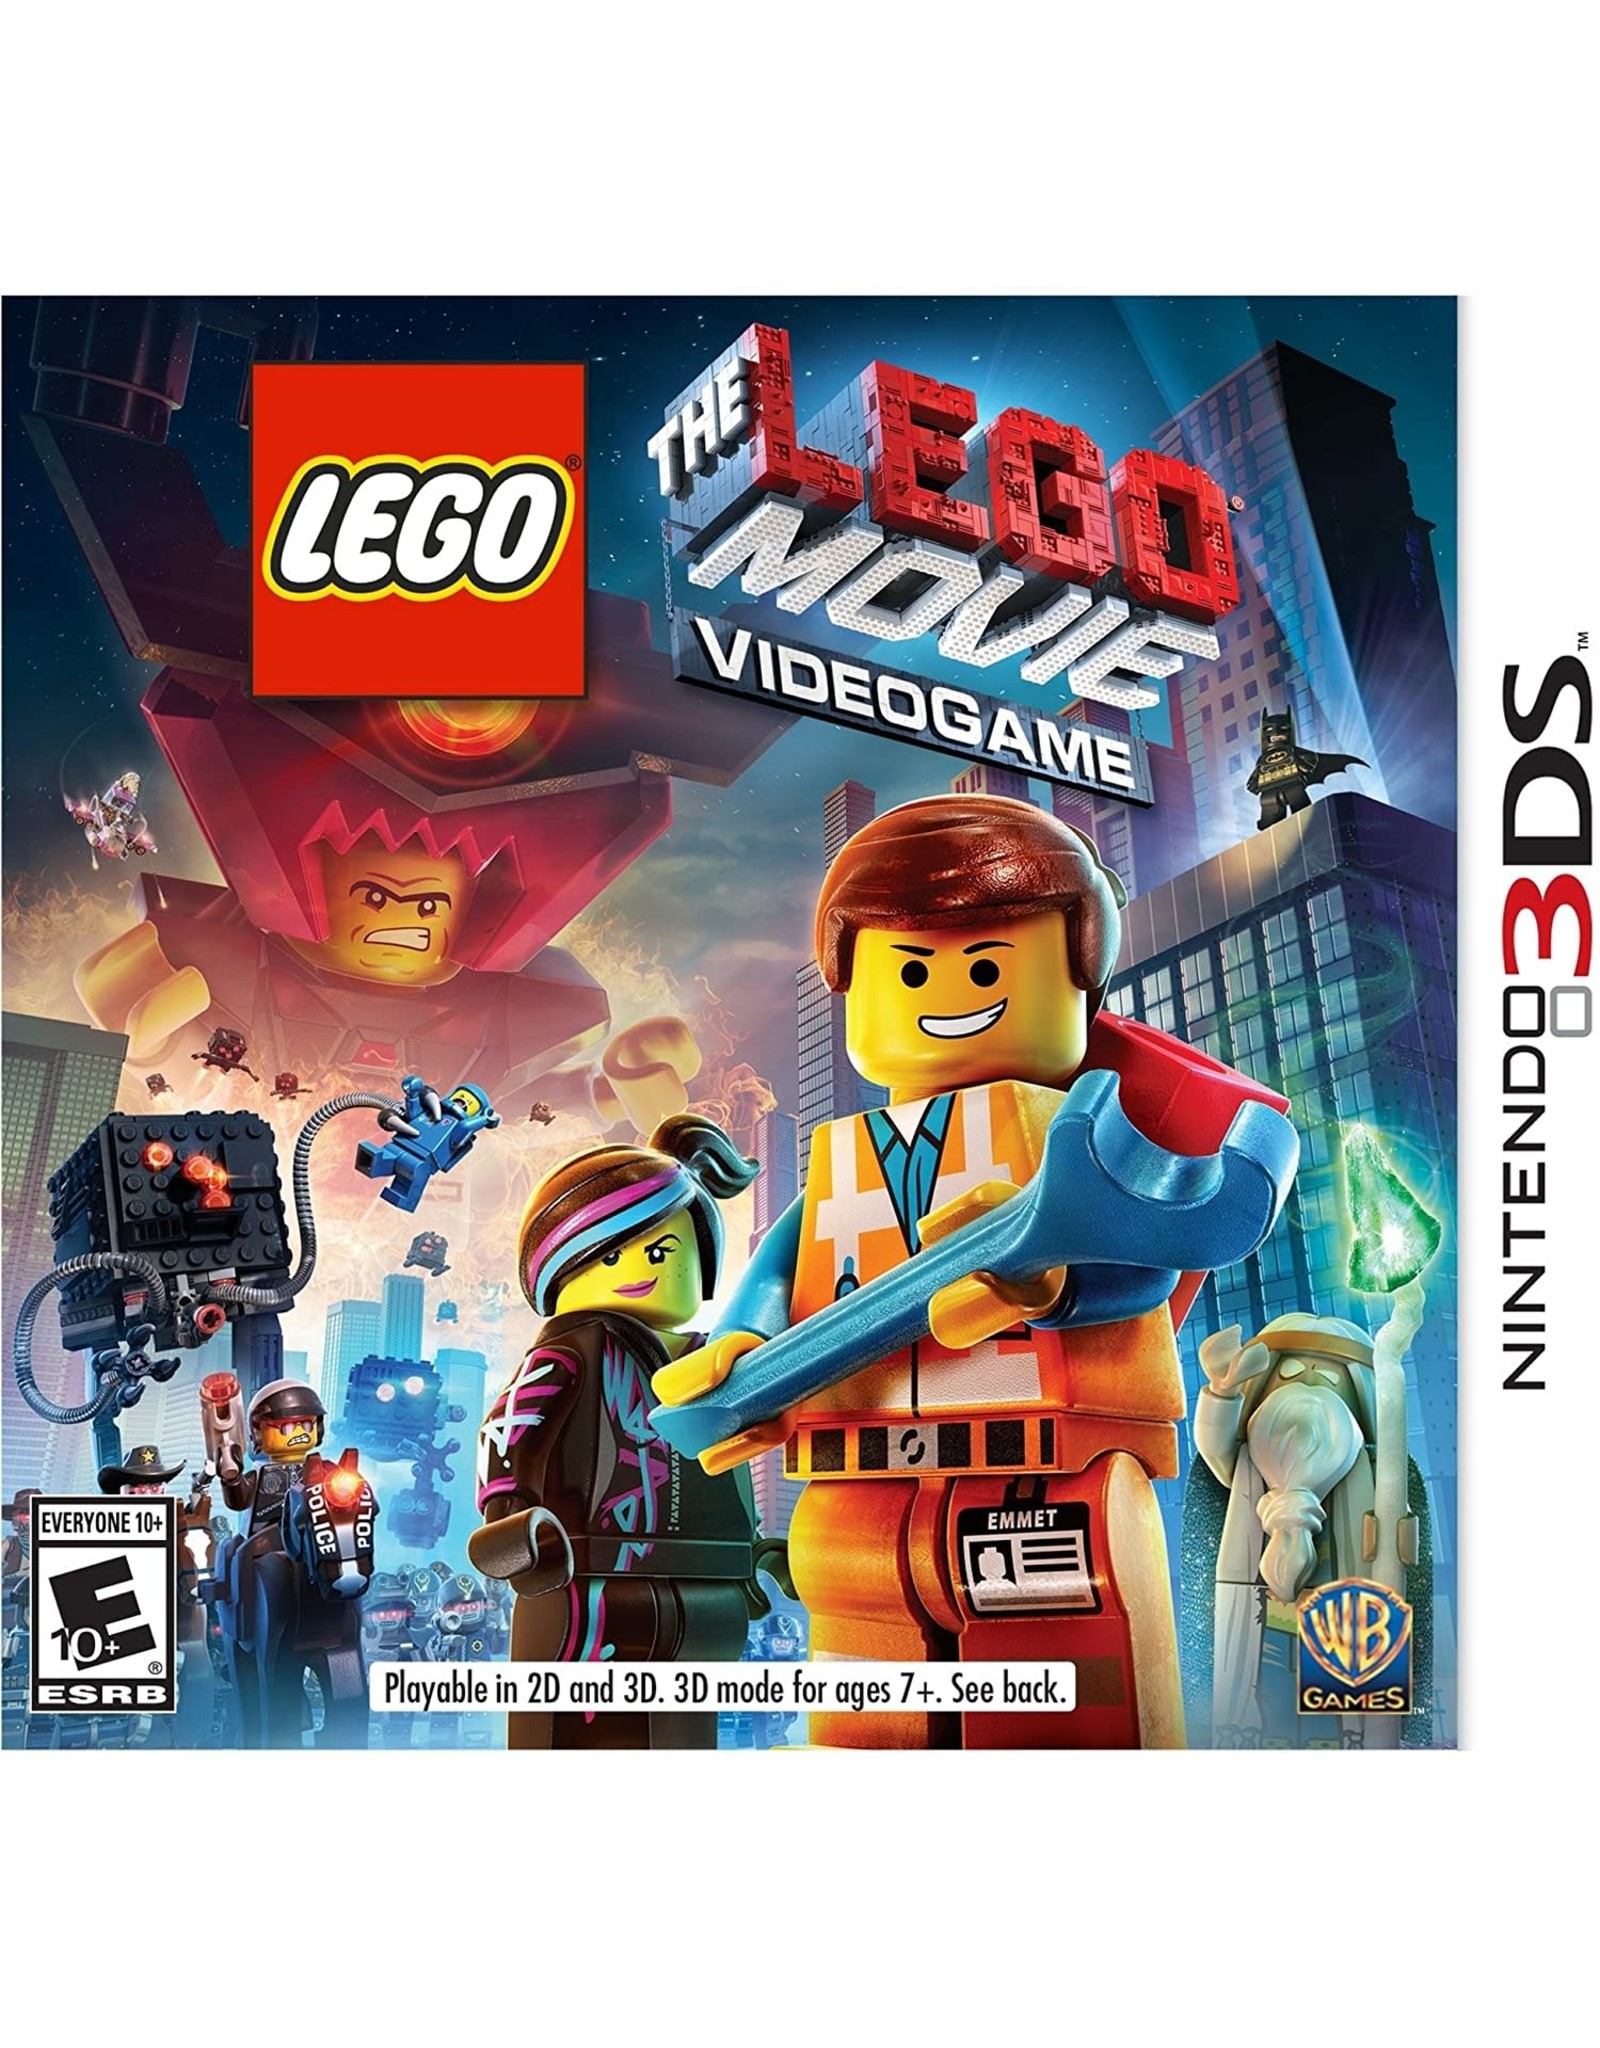 Nintendo 3DS LEGO Movie Videogame (CiB)